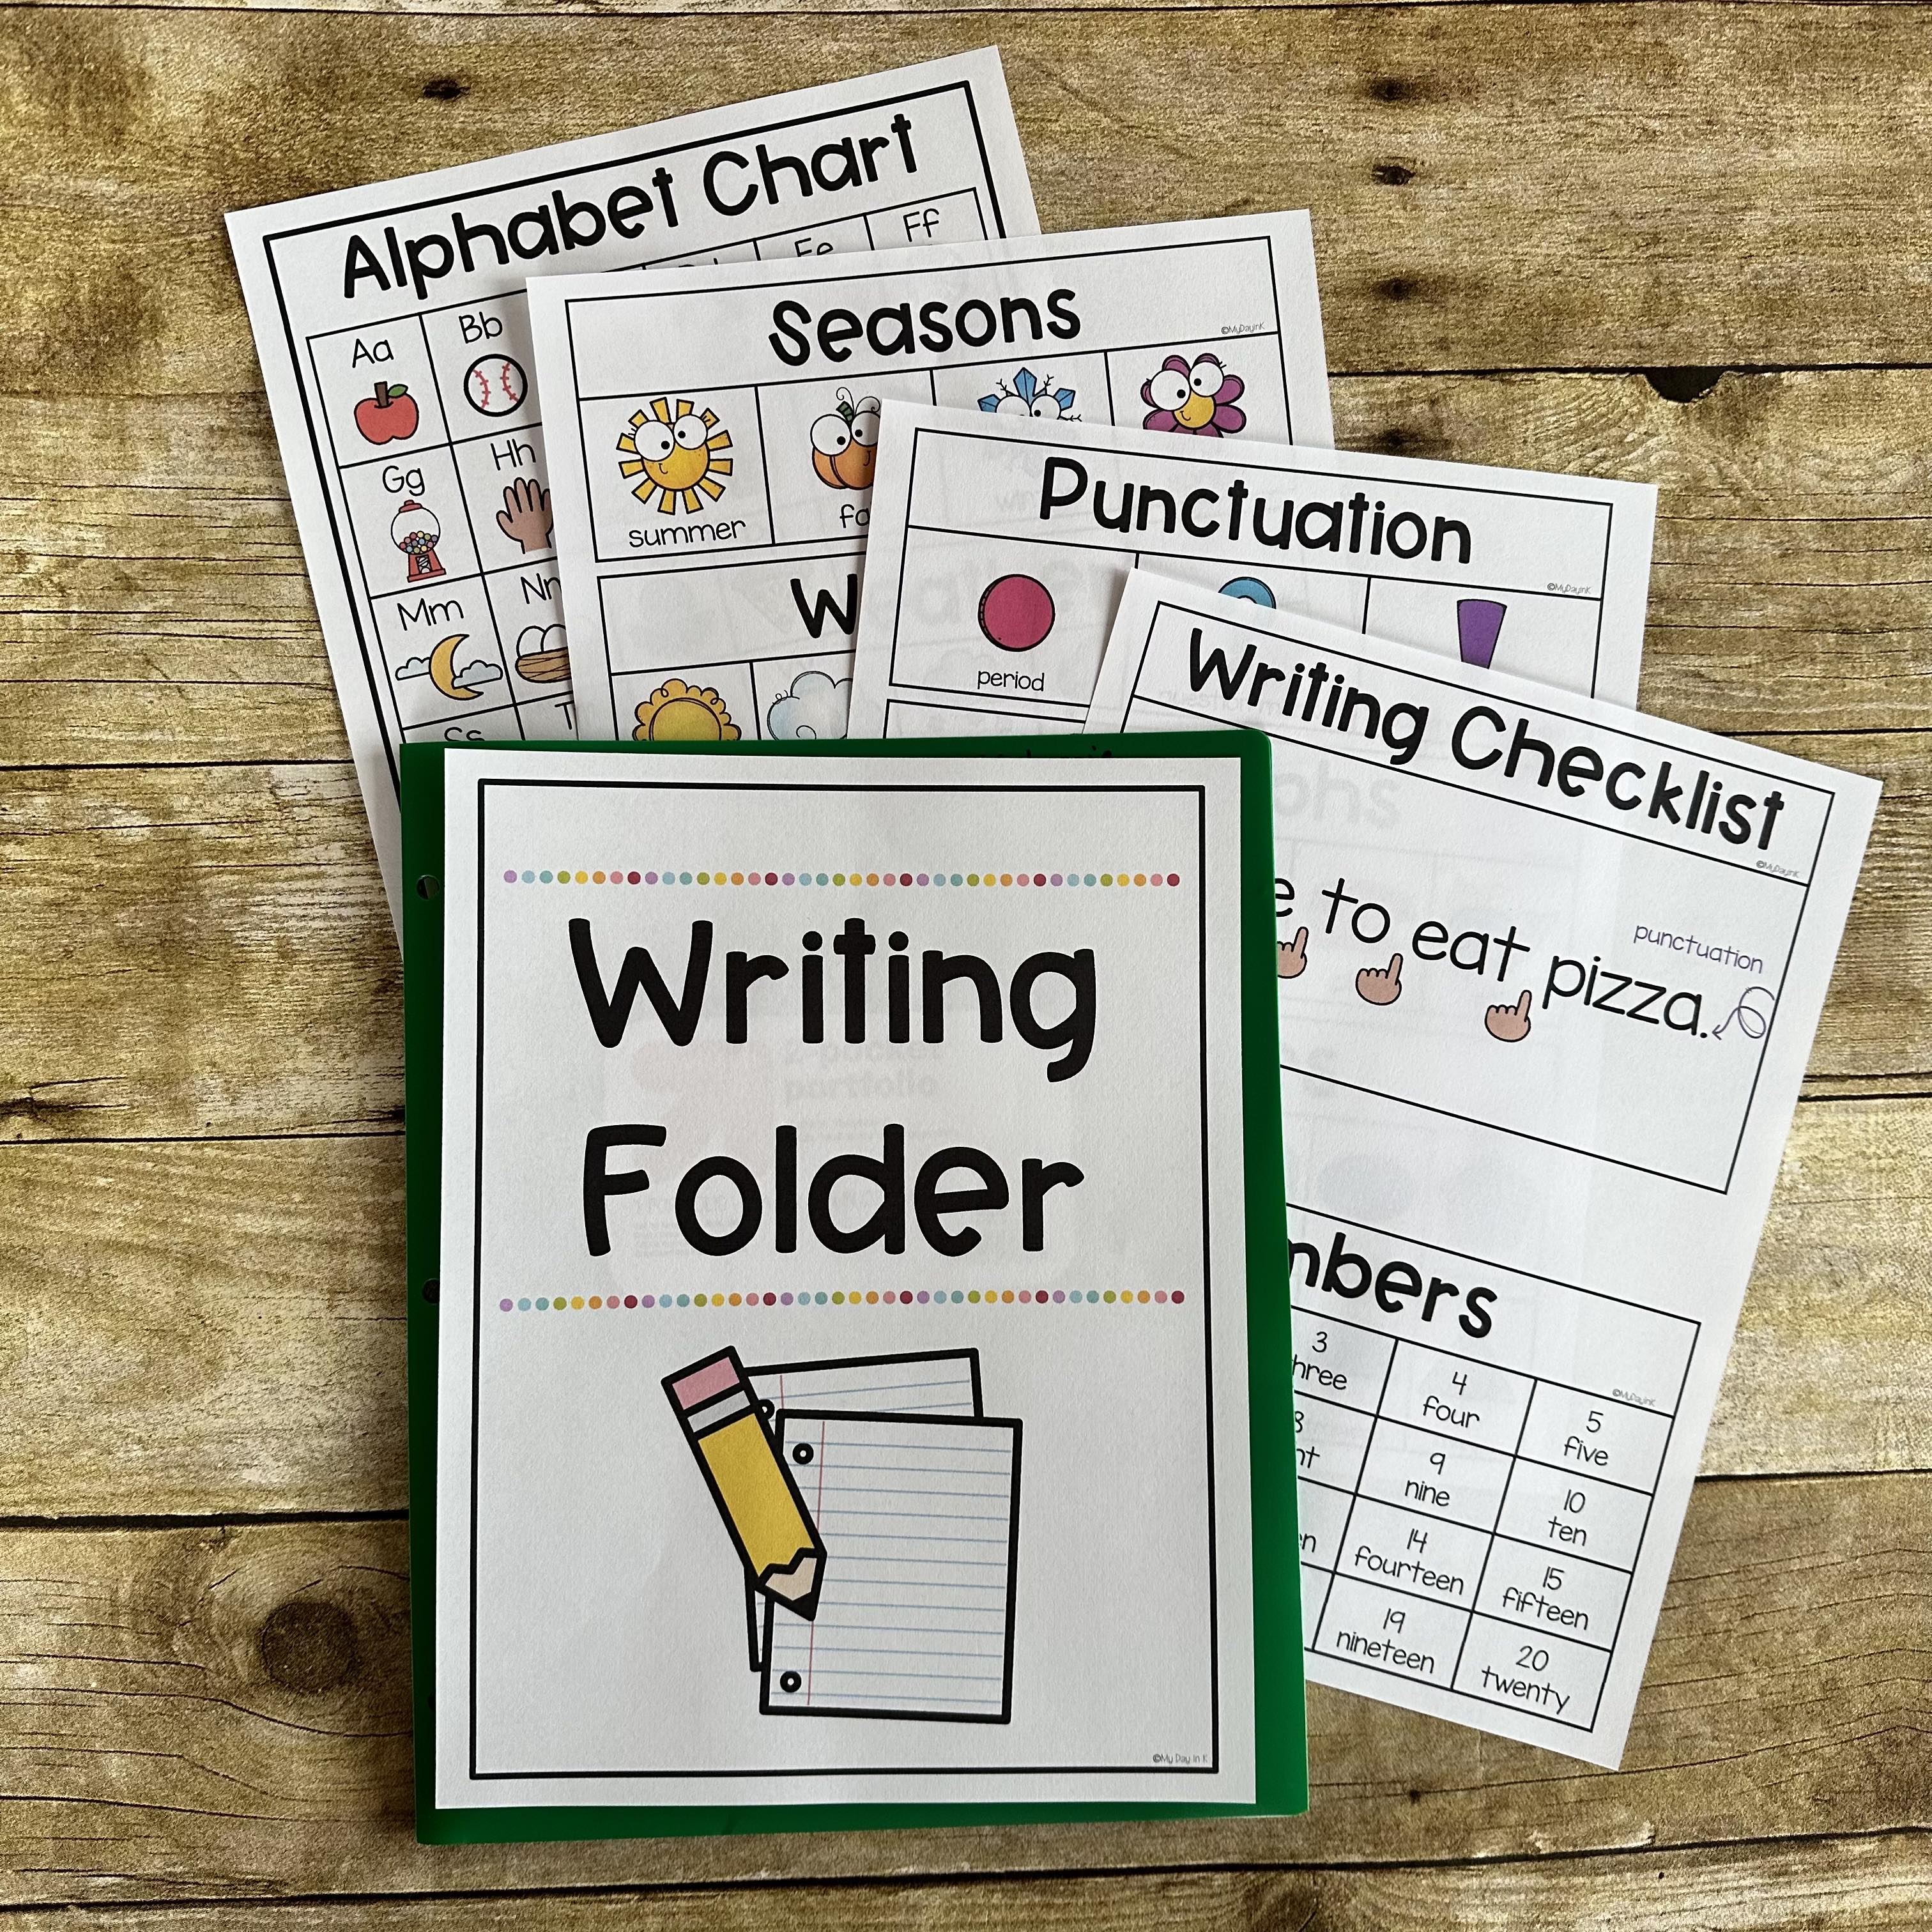 writing folder-menu style- kindergarten writing journals